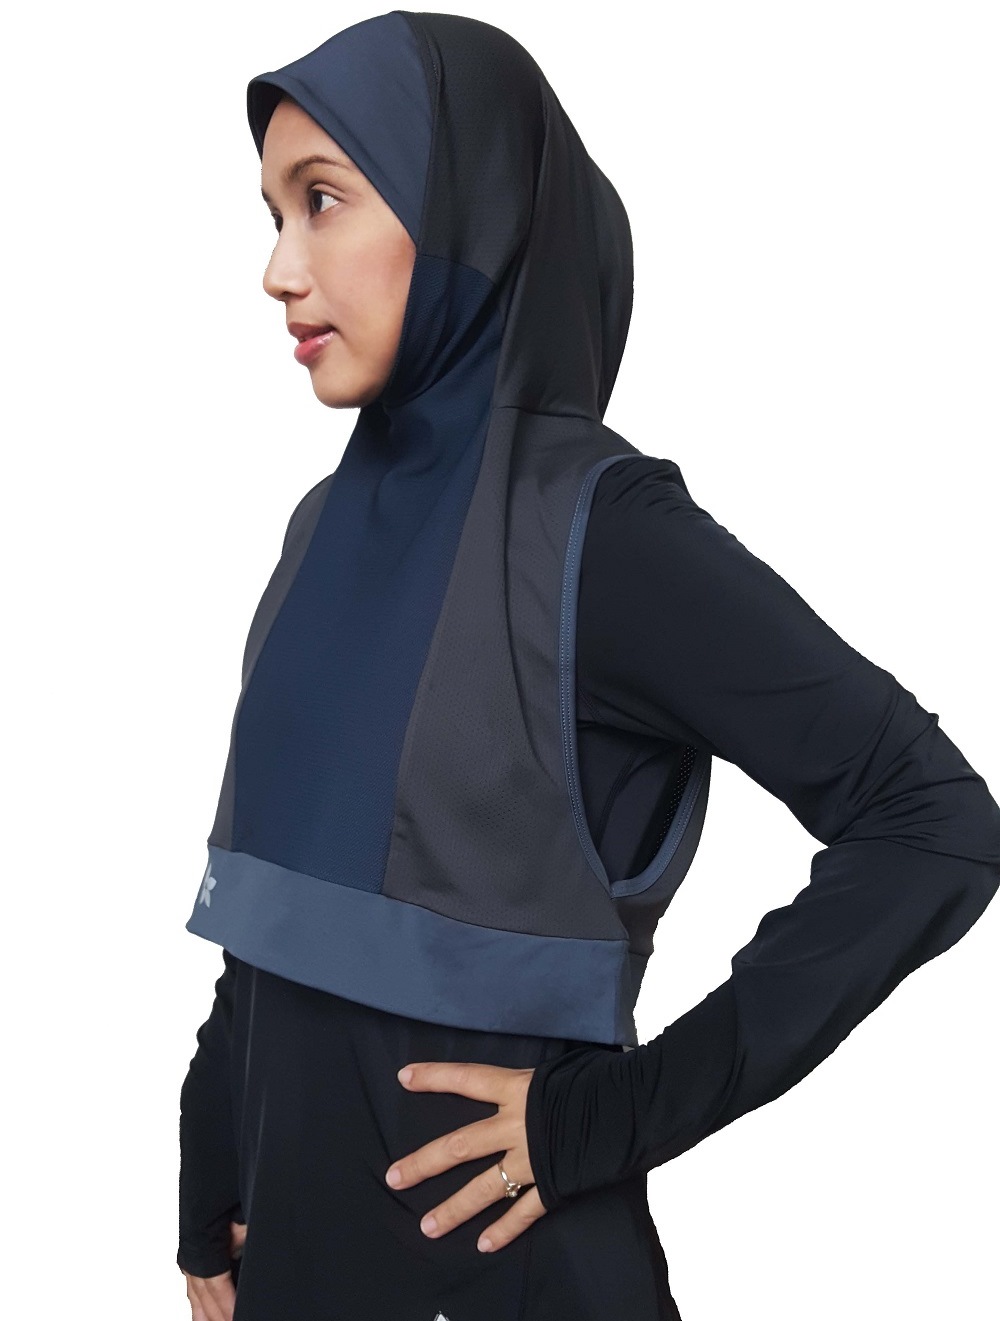 Hooda Sports  Hijab  A Design Innovation for Fit Hijabists 